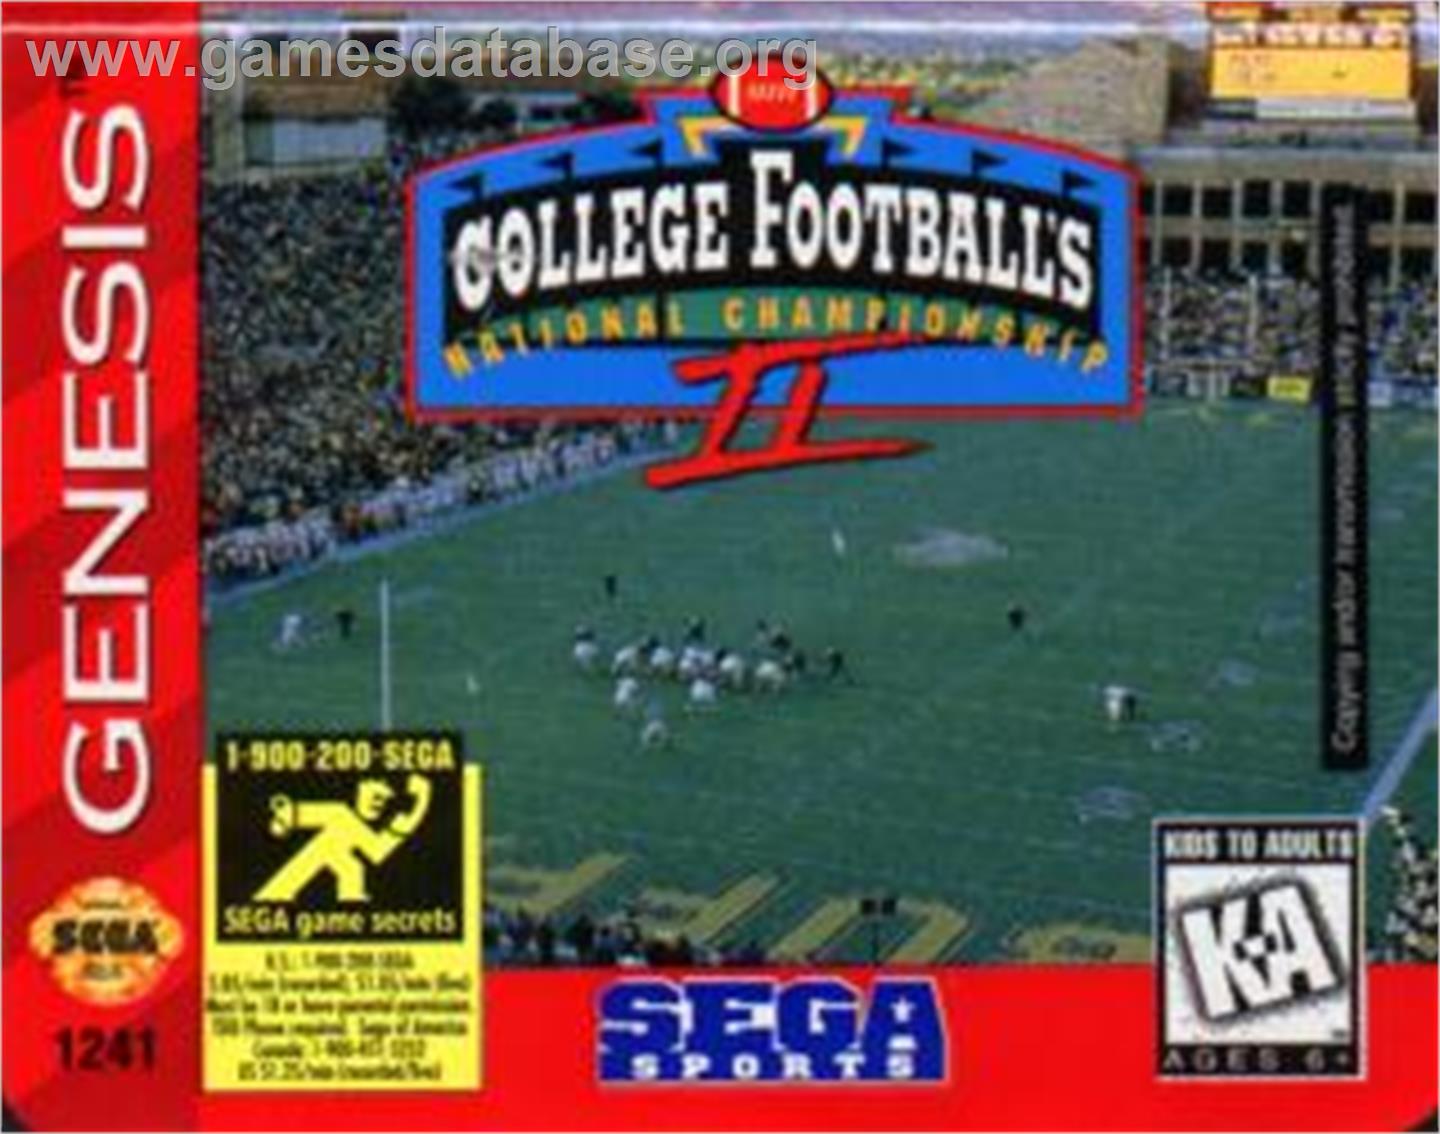 College Football's National Championship II - Sega Nomad - Artwork - Cartridge